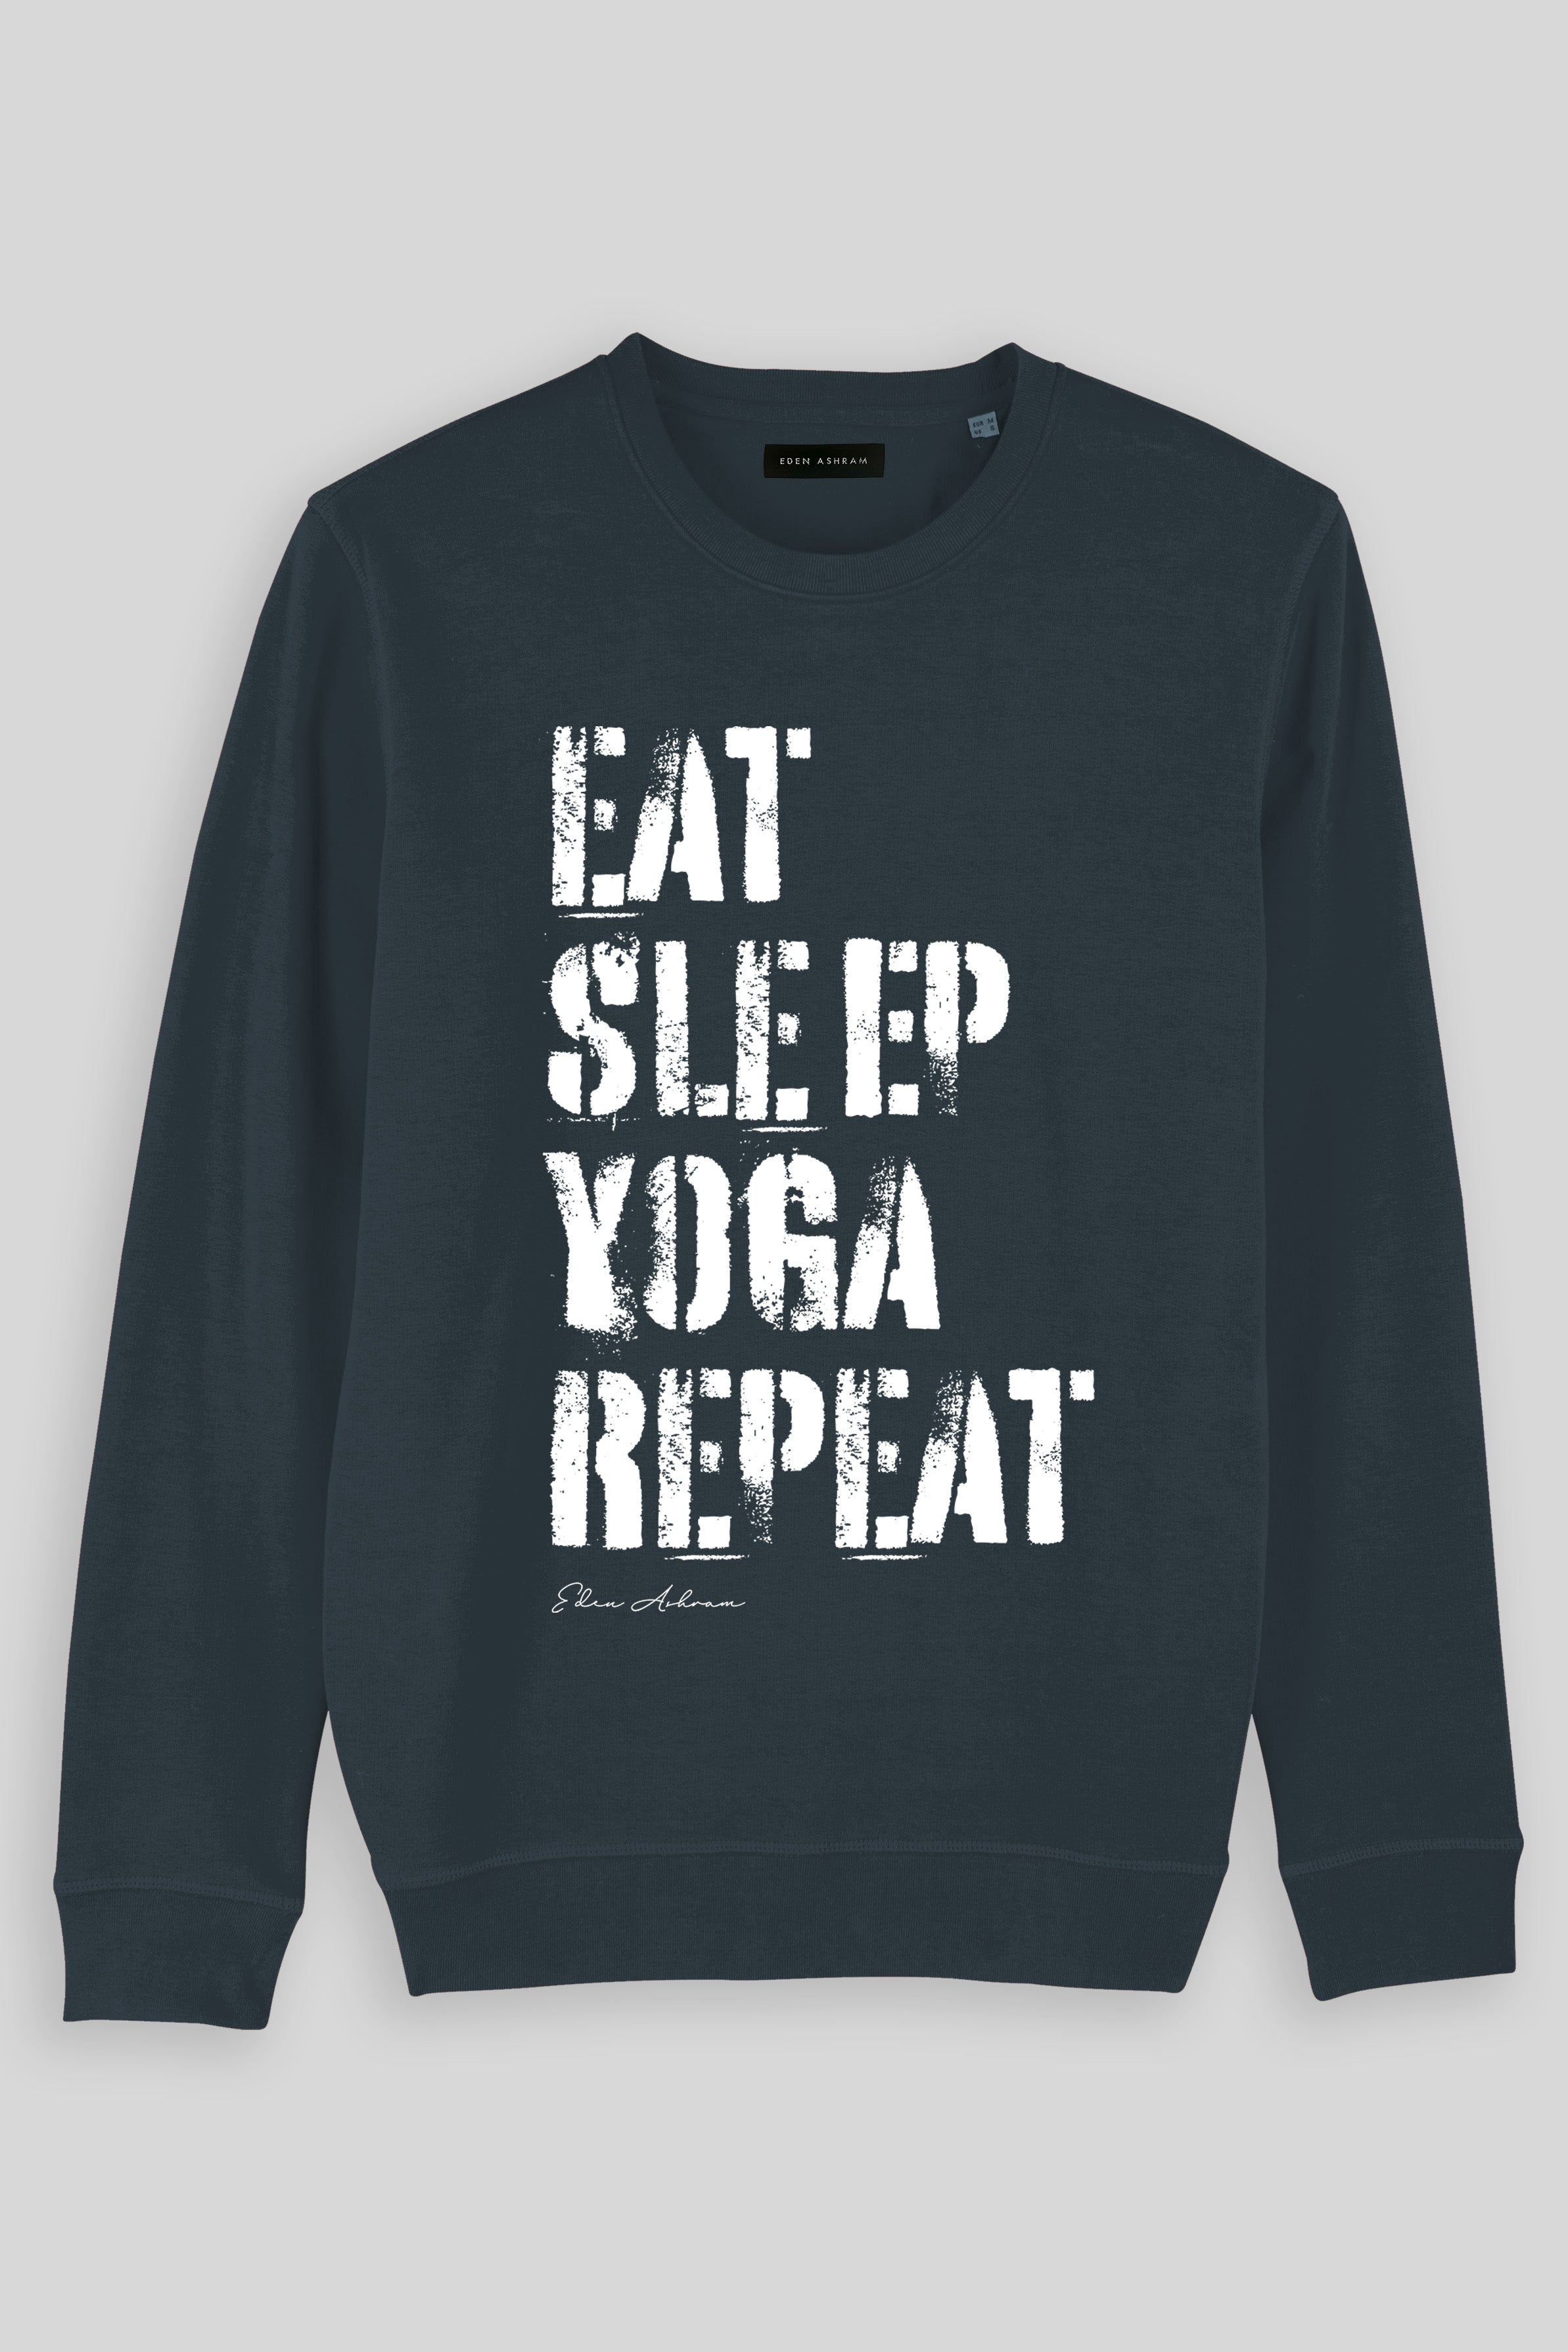 Eden Ashram Eat, Sleep, Yoga Repeat Premium Crew Neck Sweatshirt India Ink Grey